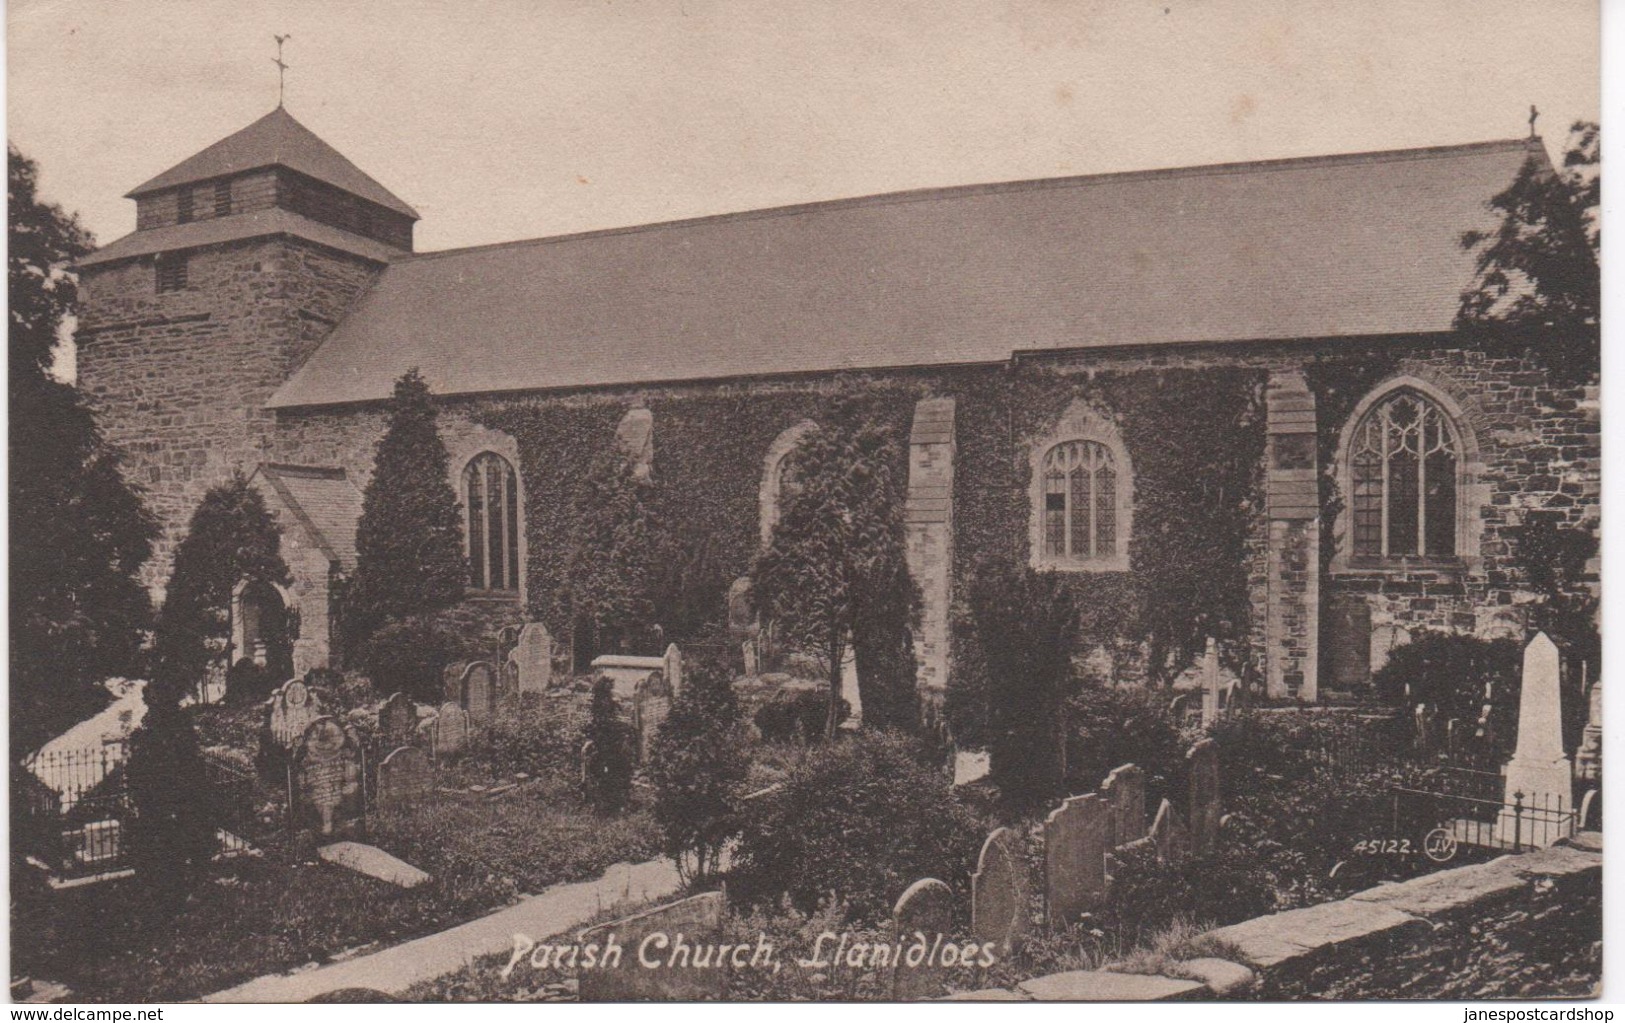 PARISH CHURCH - LLANIDLOES - POWYS/MONTGOMERYSHIRE BORDERS - - Montgomeryshire